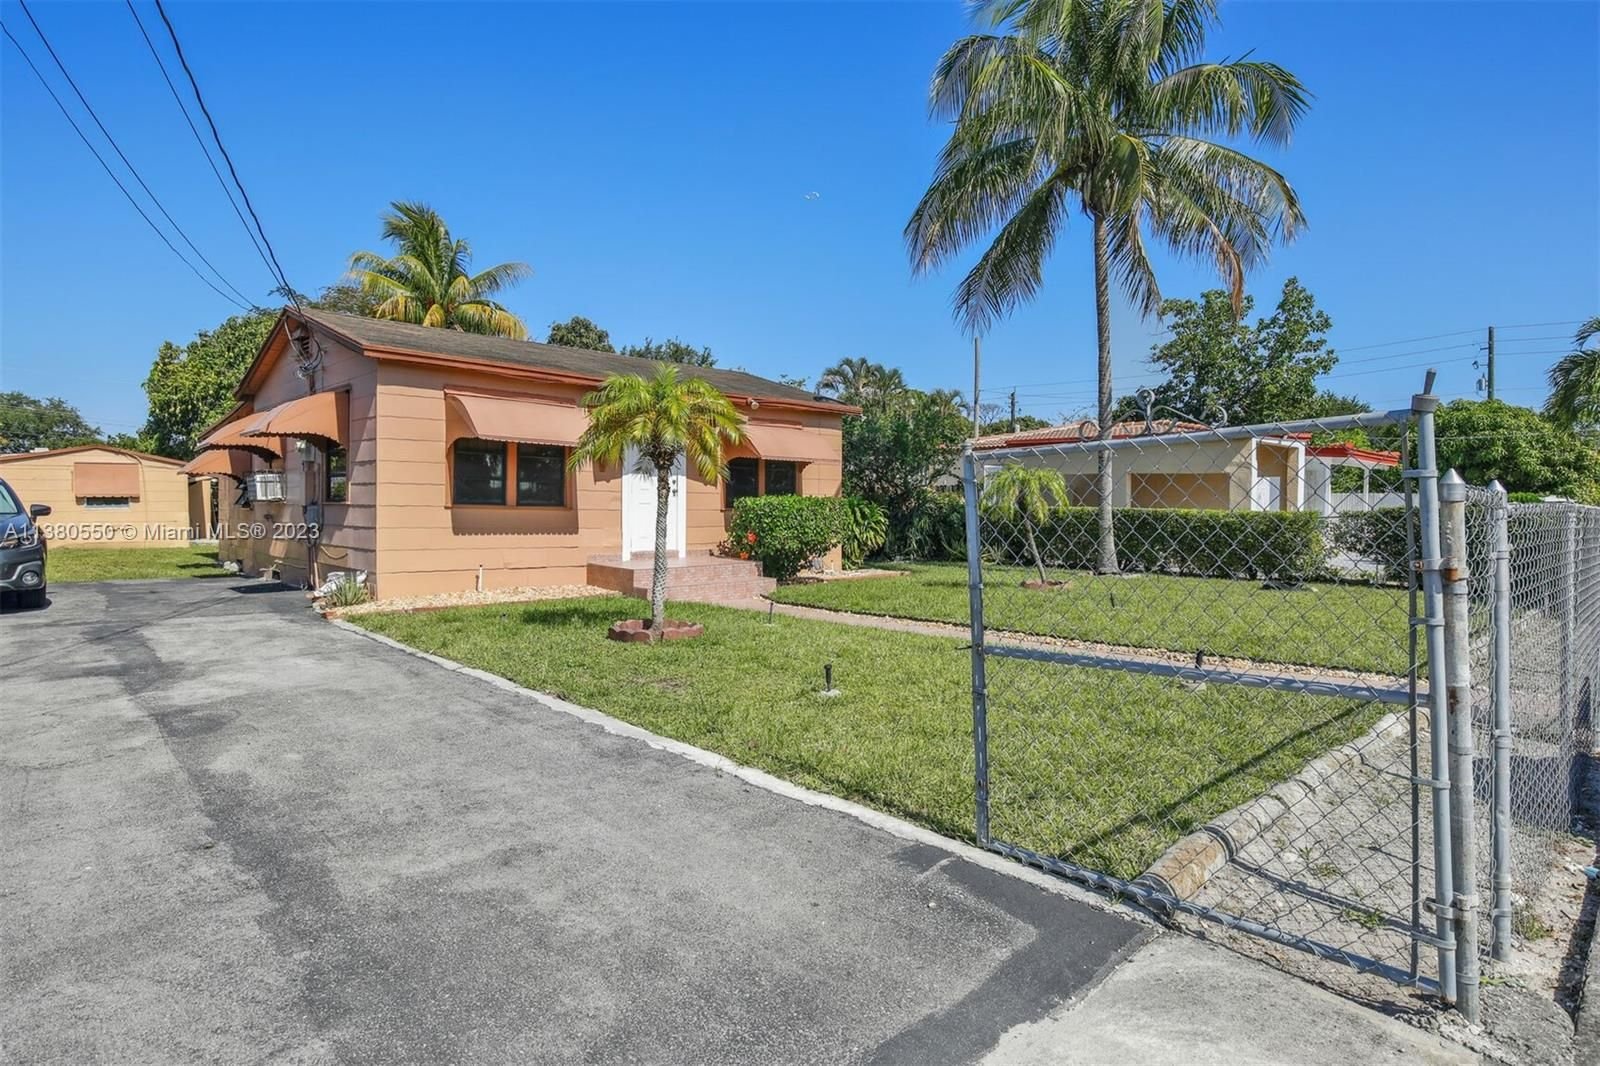 Real estate property located at 10406 25th Ave, Miami-Dade County, Miami, FL